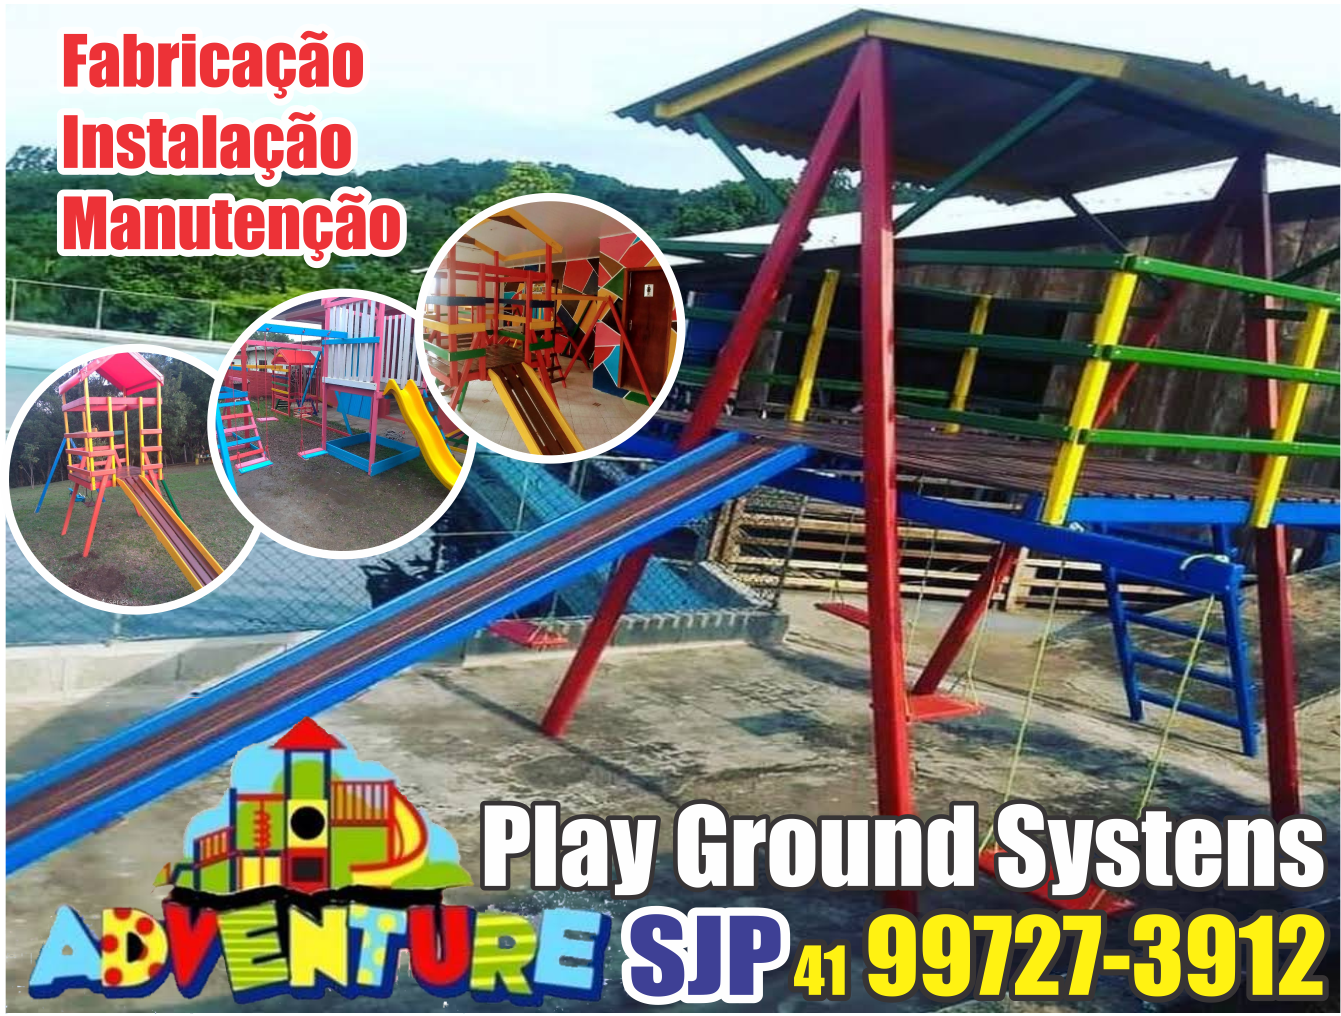 Playground Systens Adventure Fones: (41) 99727-3912 /